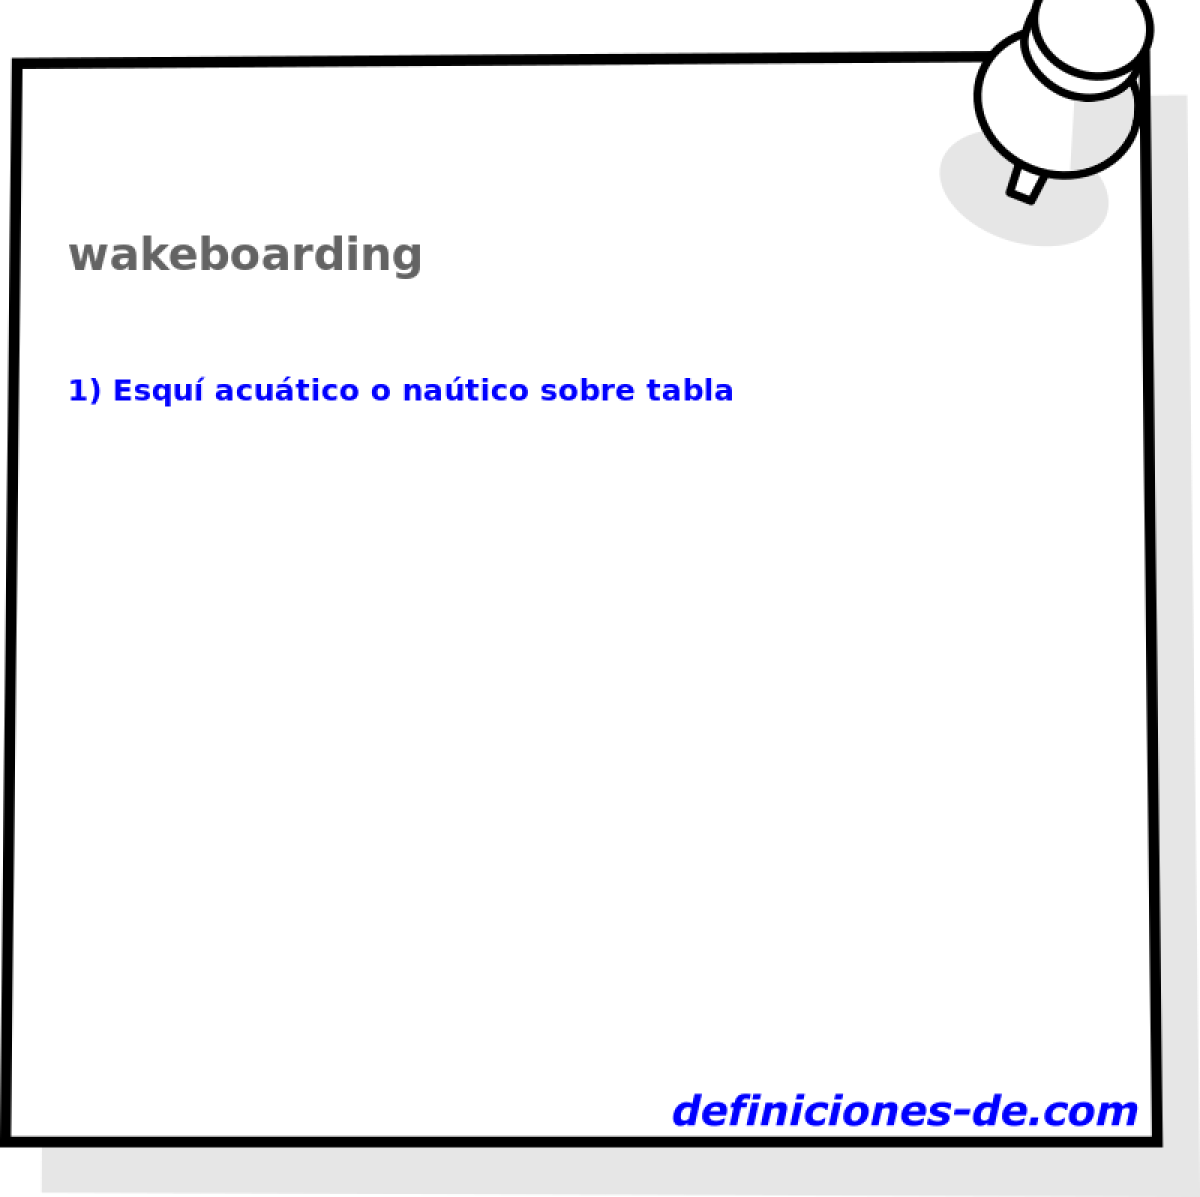 wakeboarding 